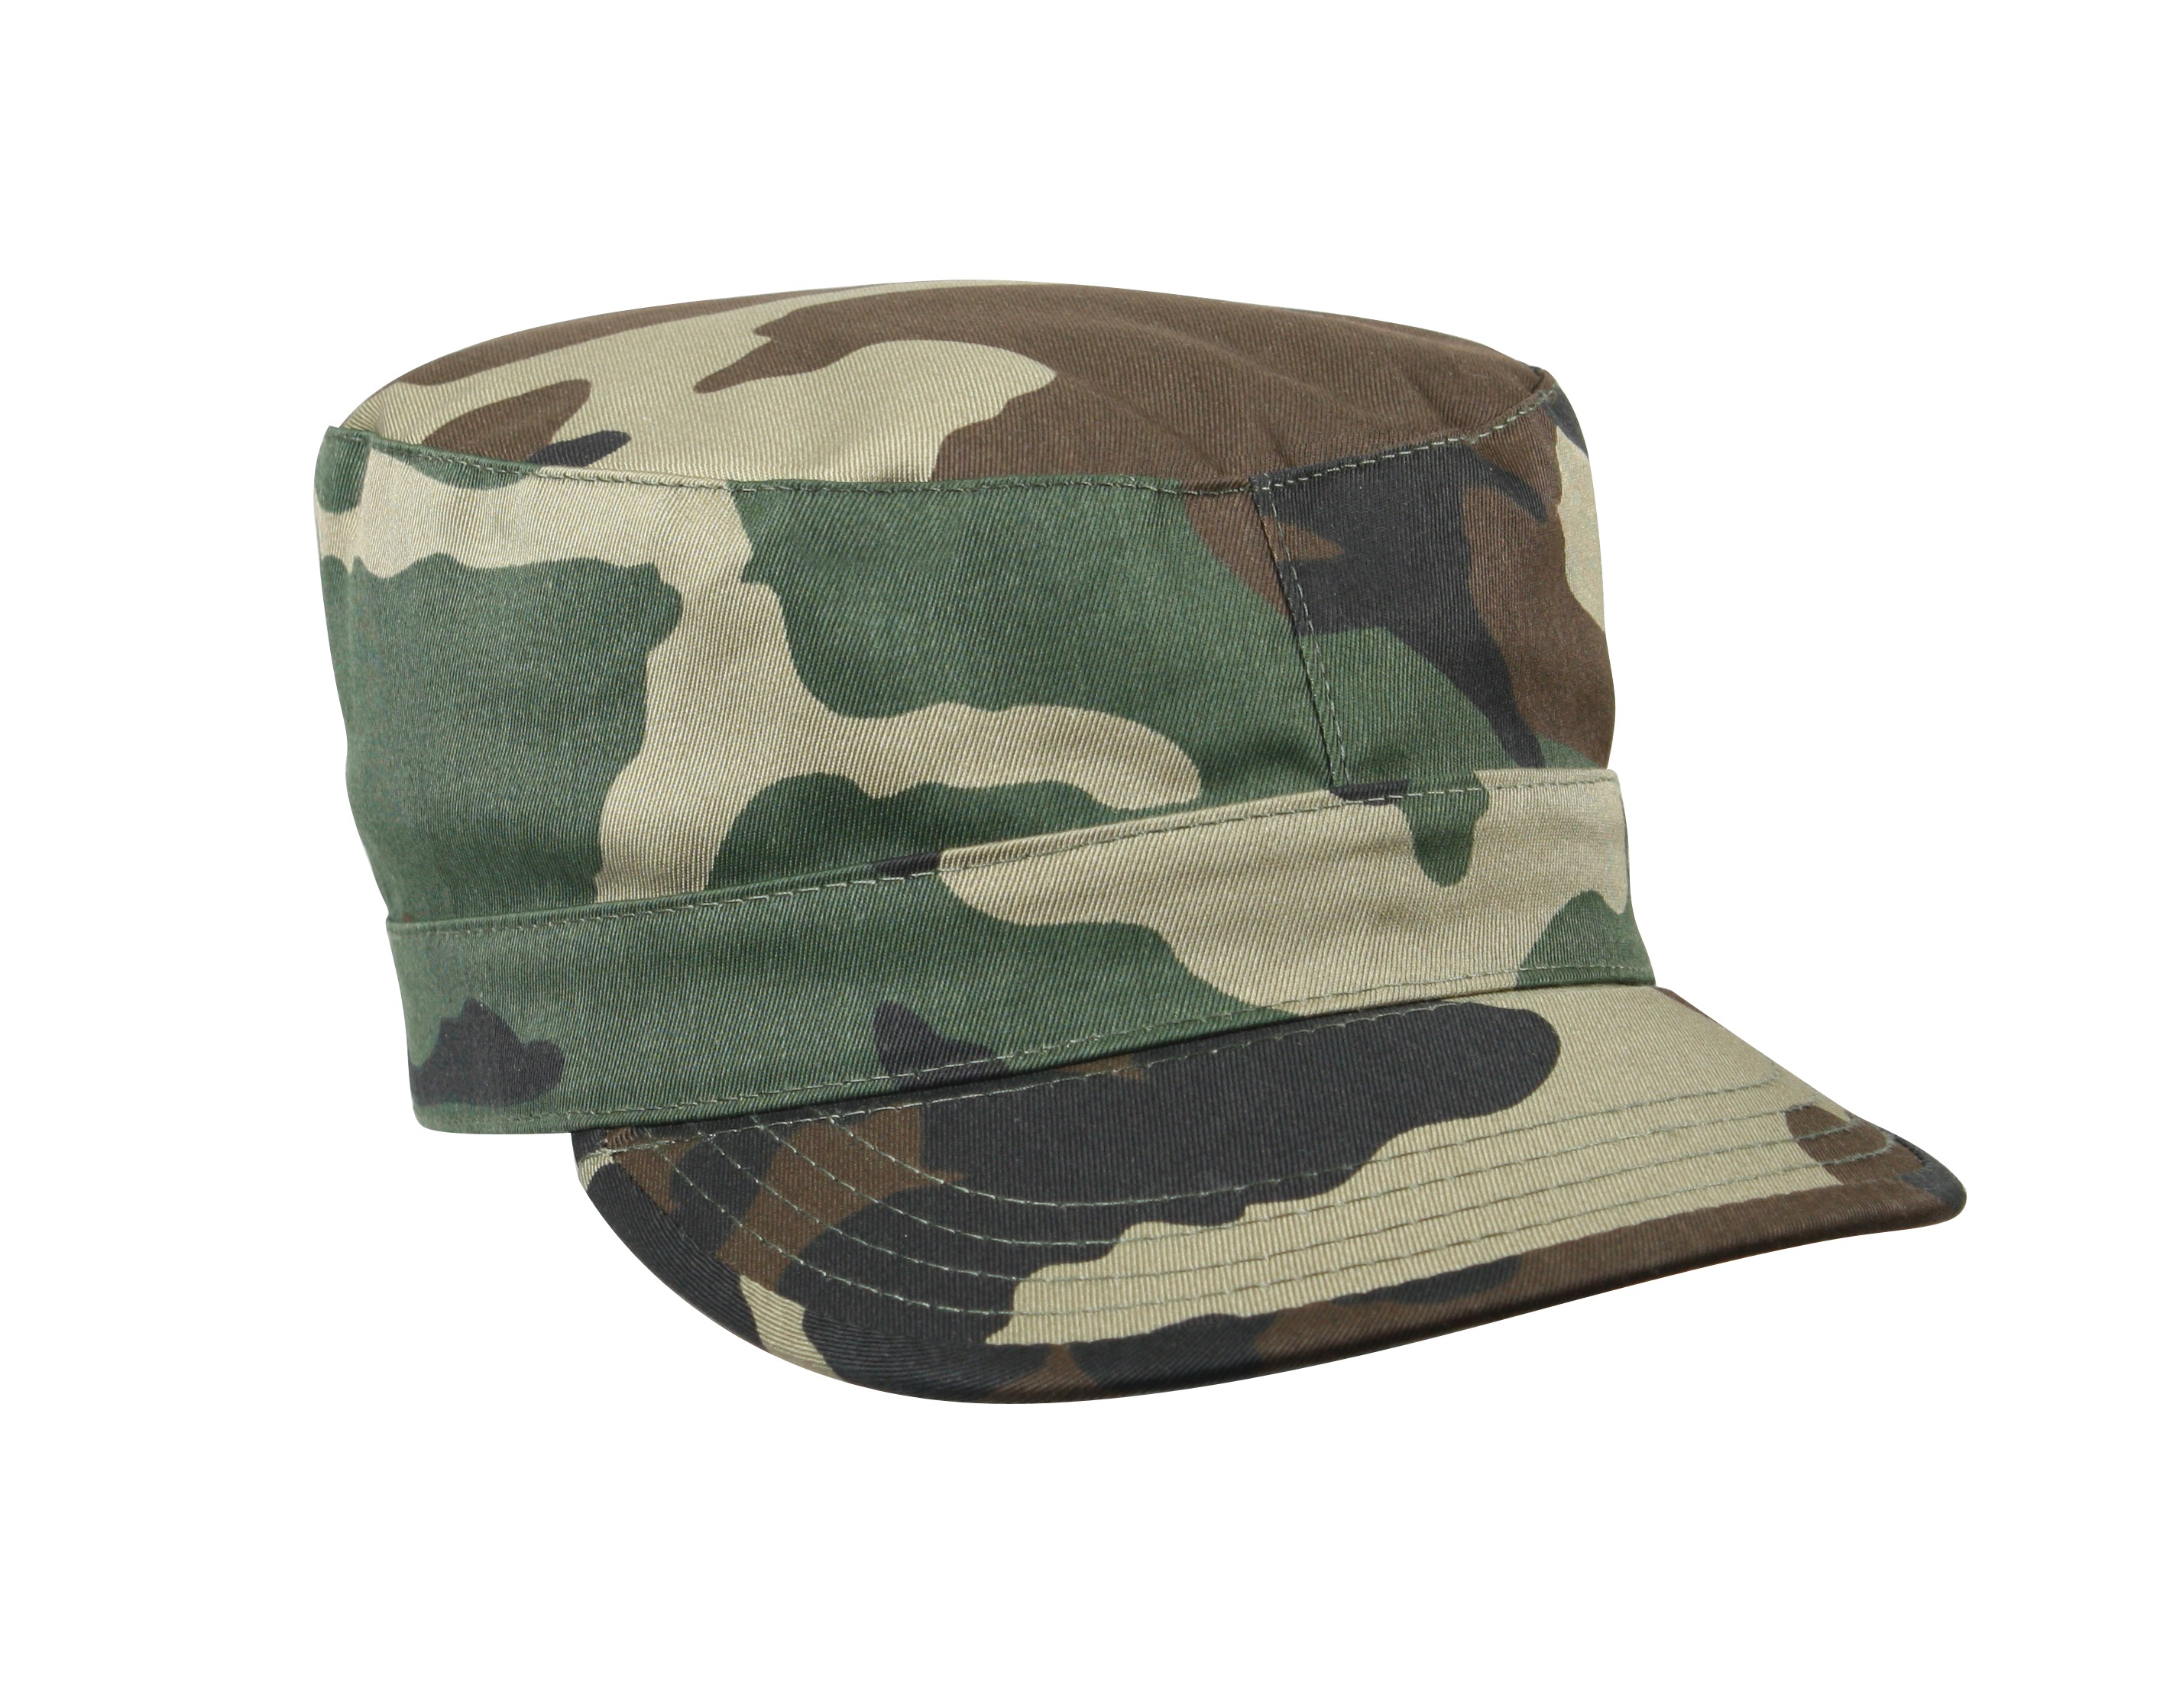 Camouflage Military Fatigue Caps Value Price Camo Cap: Army Navy Shop